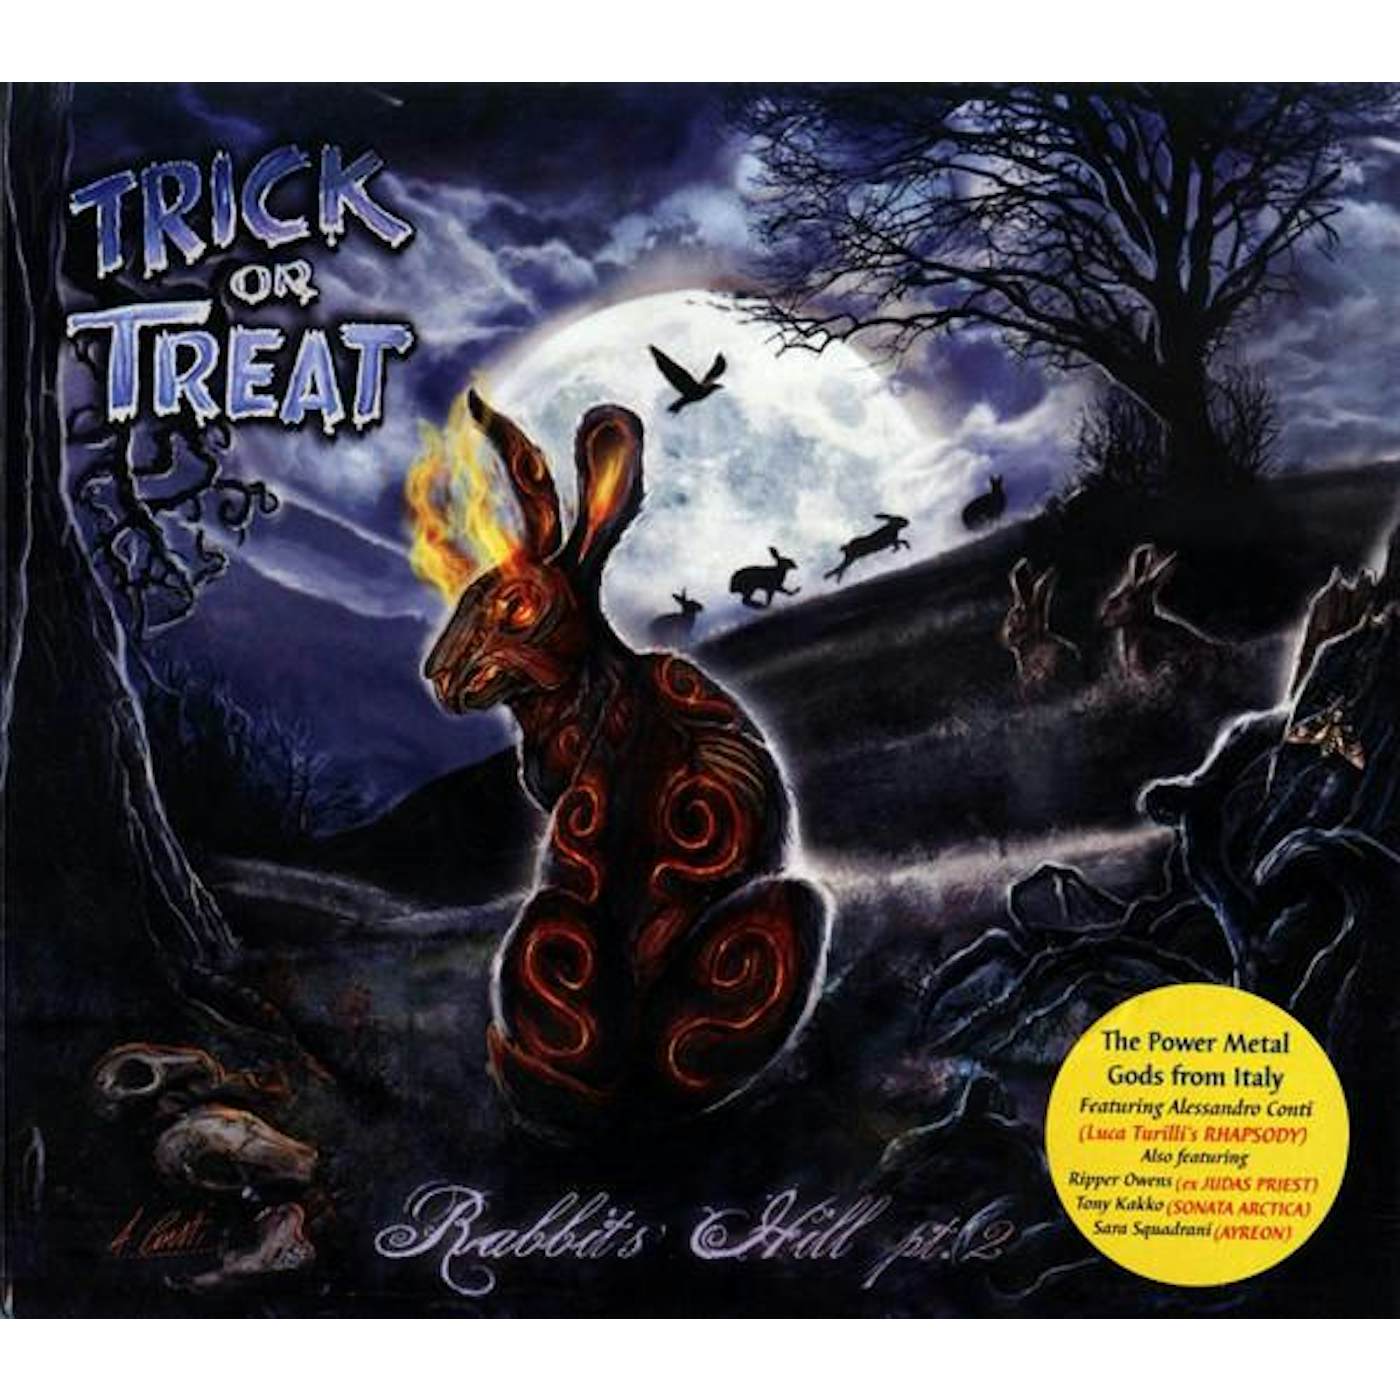 Trick or Treat Rabbits hill pt. 2 CD